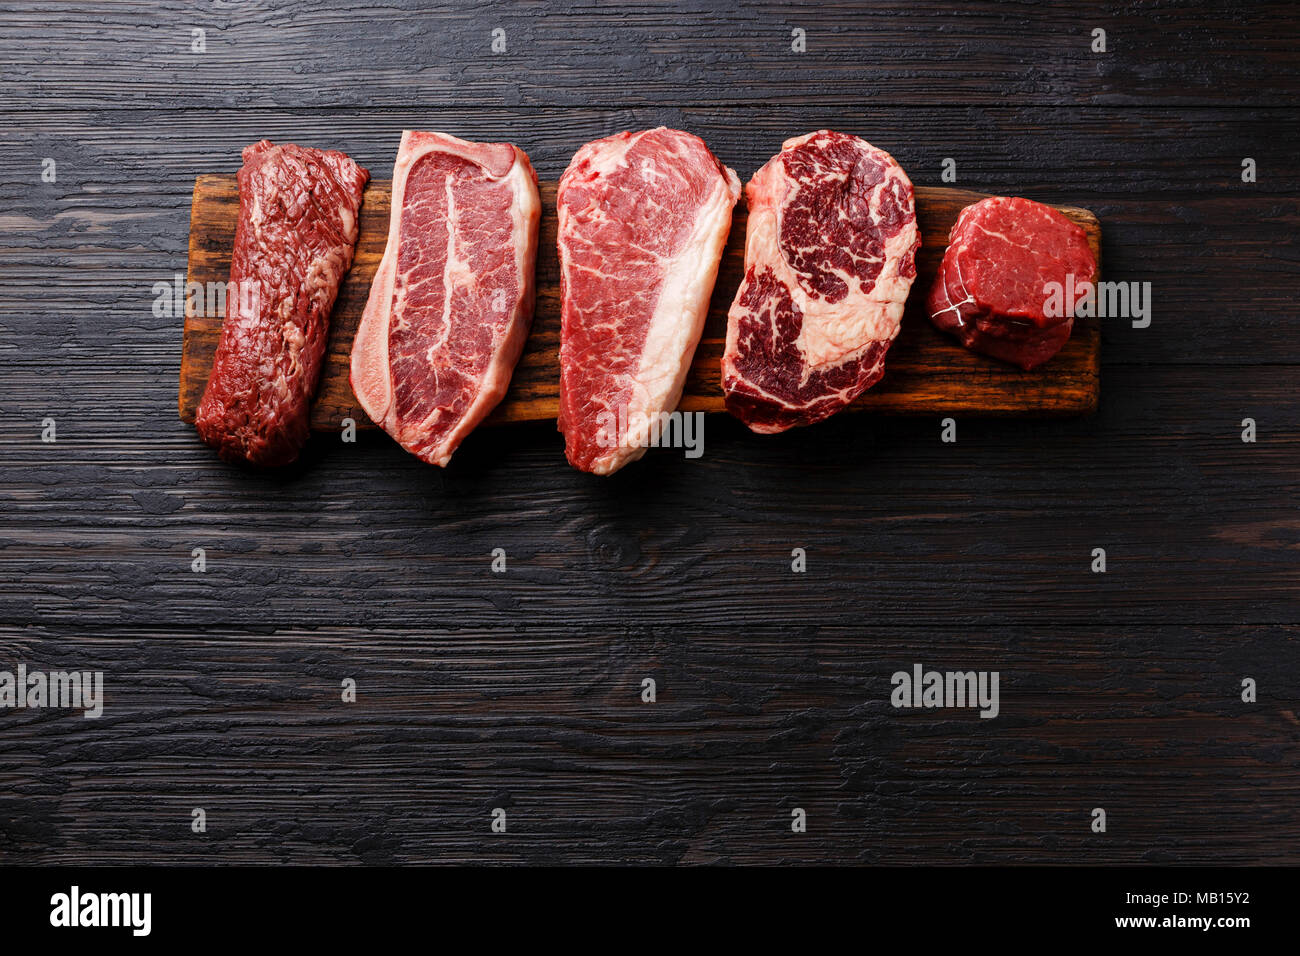 Variety of Raw Black Angus Prime meat steaks Machete, Blade on bone, Striploin, Rib eye, Tenderloin fillet mignon on wooden board copy space Stock Photo